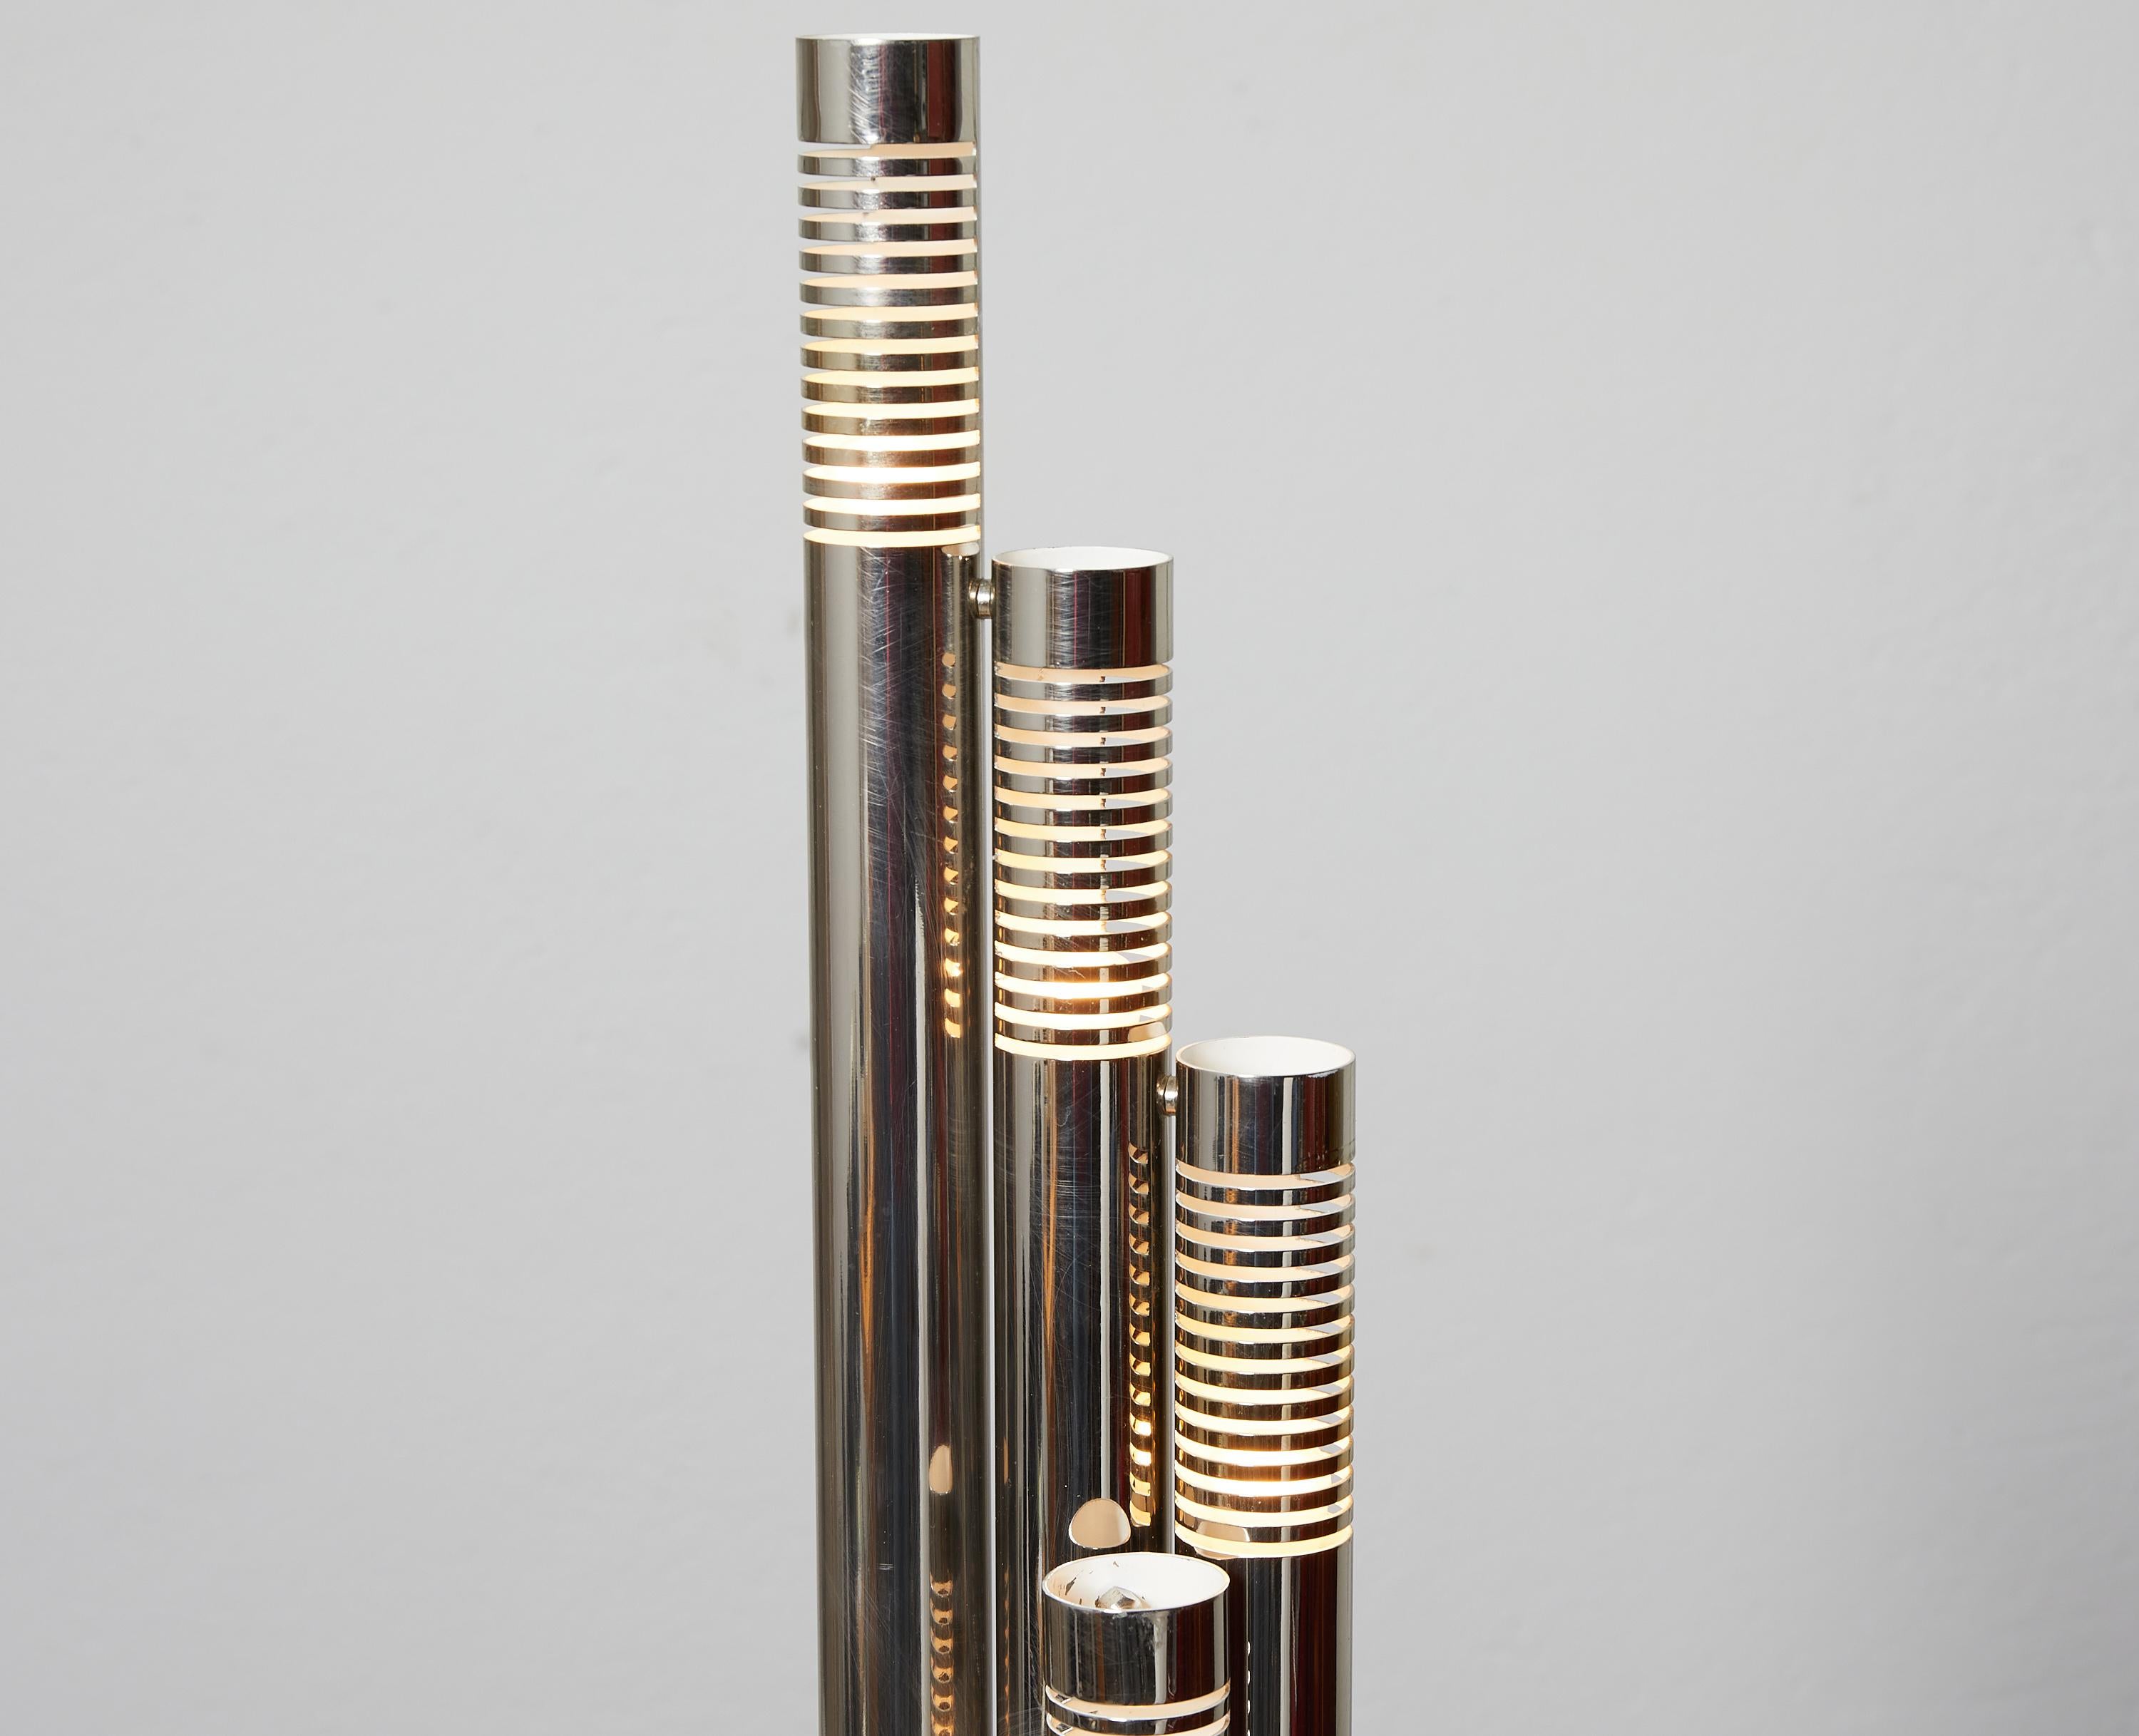 Space Age Italian Chromed Metal Tubular Table Lamp, c. 1970